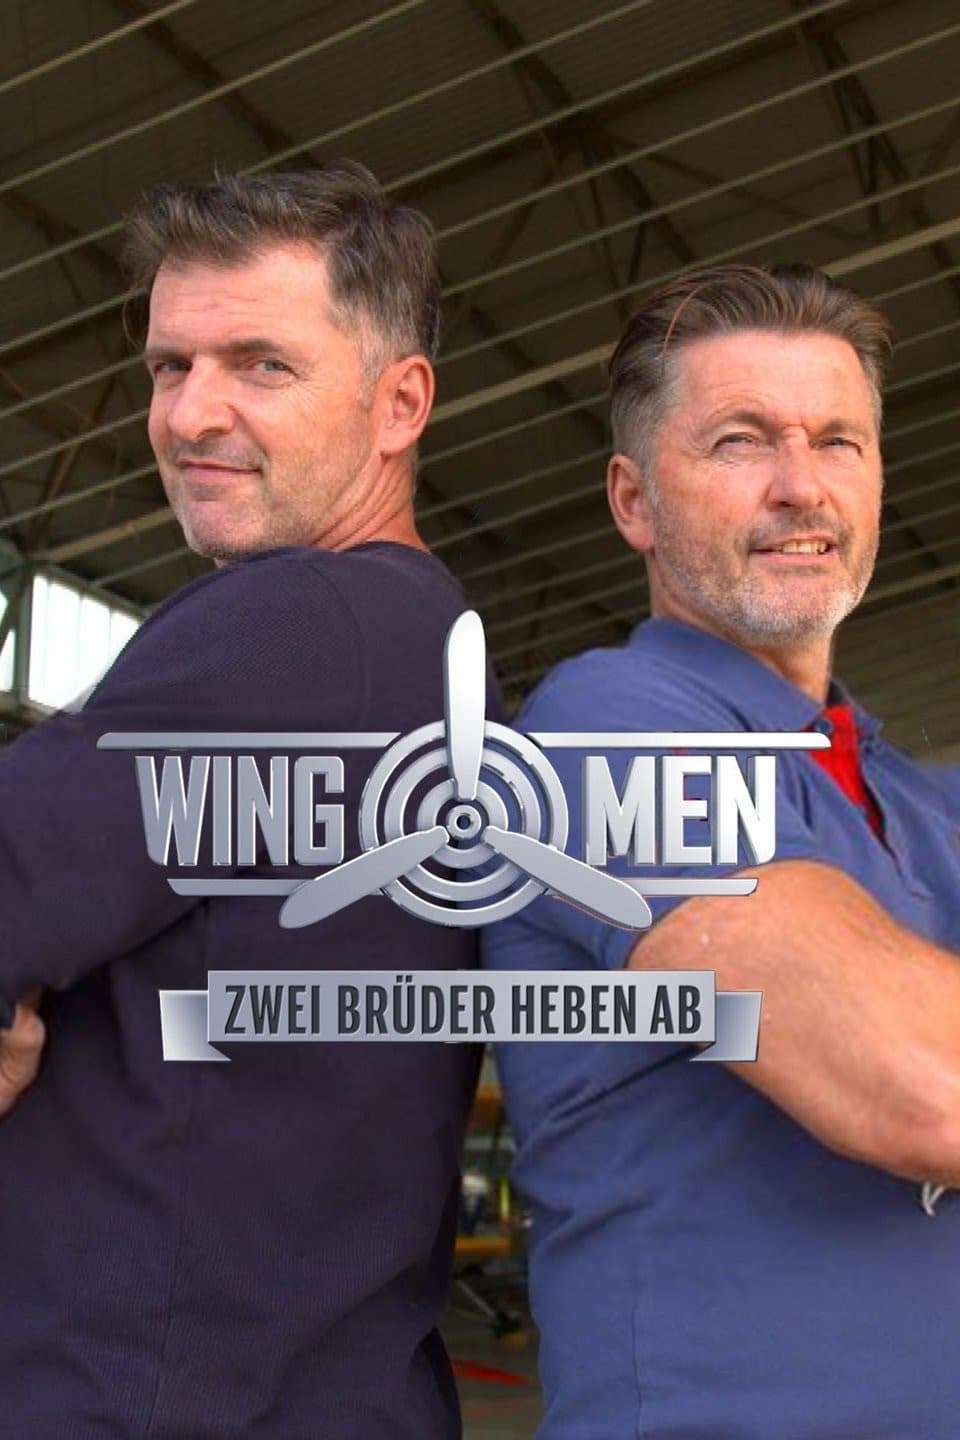 Wingmen - Zwei Brüder heben ab